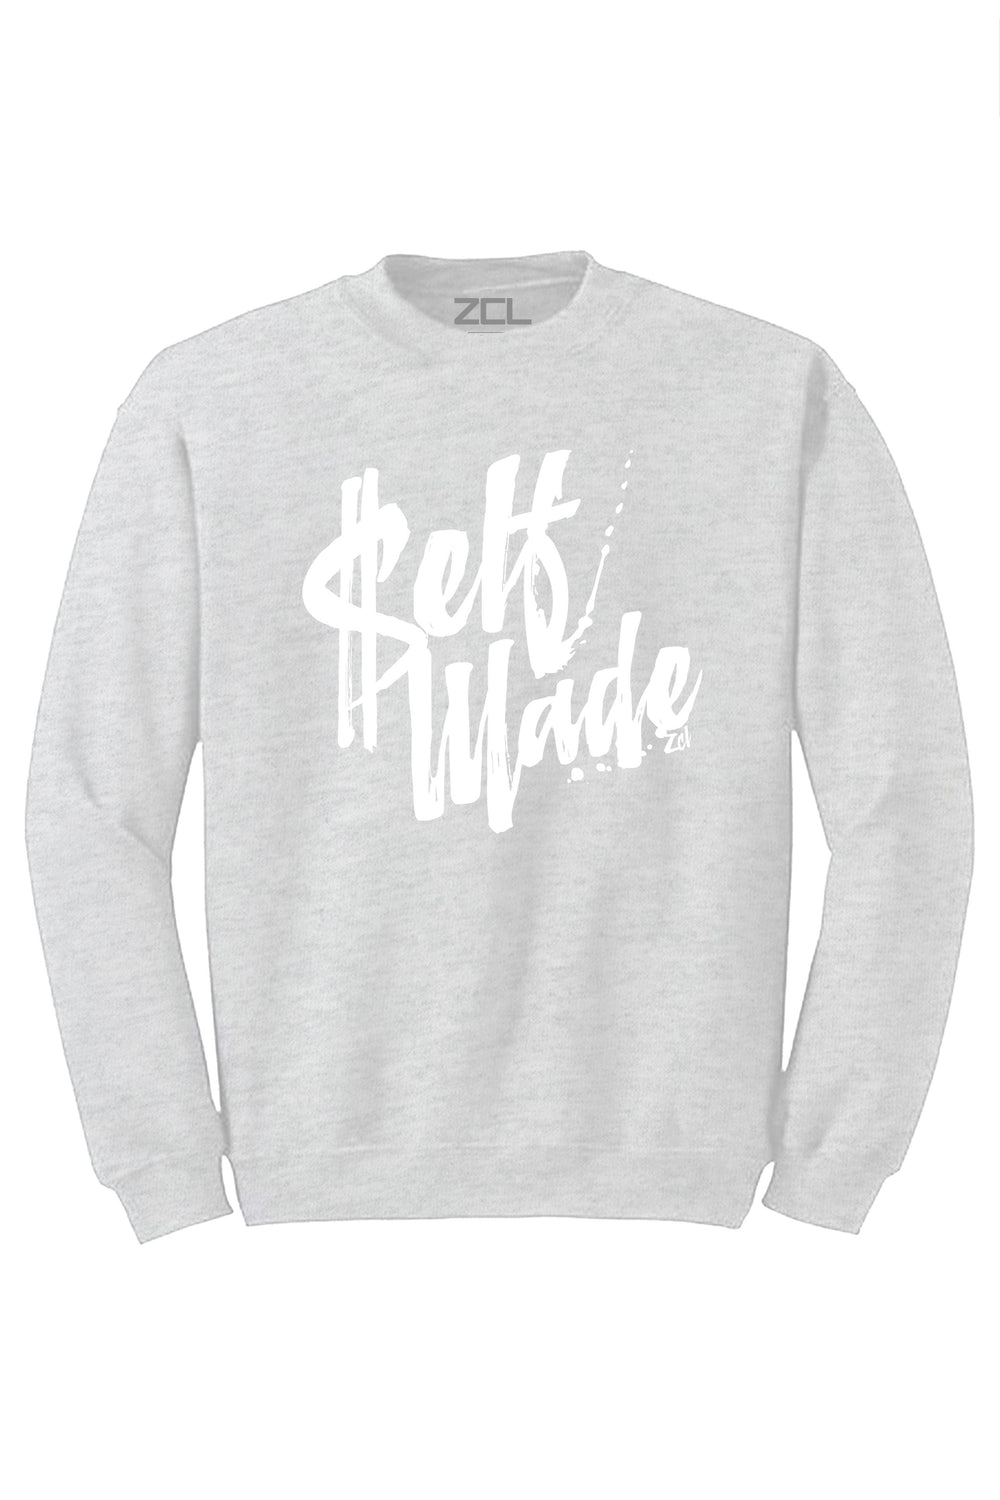 Self Made Crewneck Sweatshirt (White Logo) - Zamage